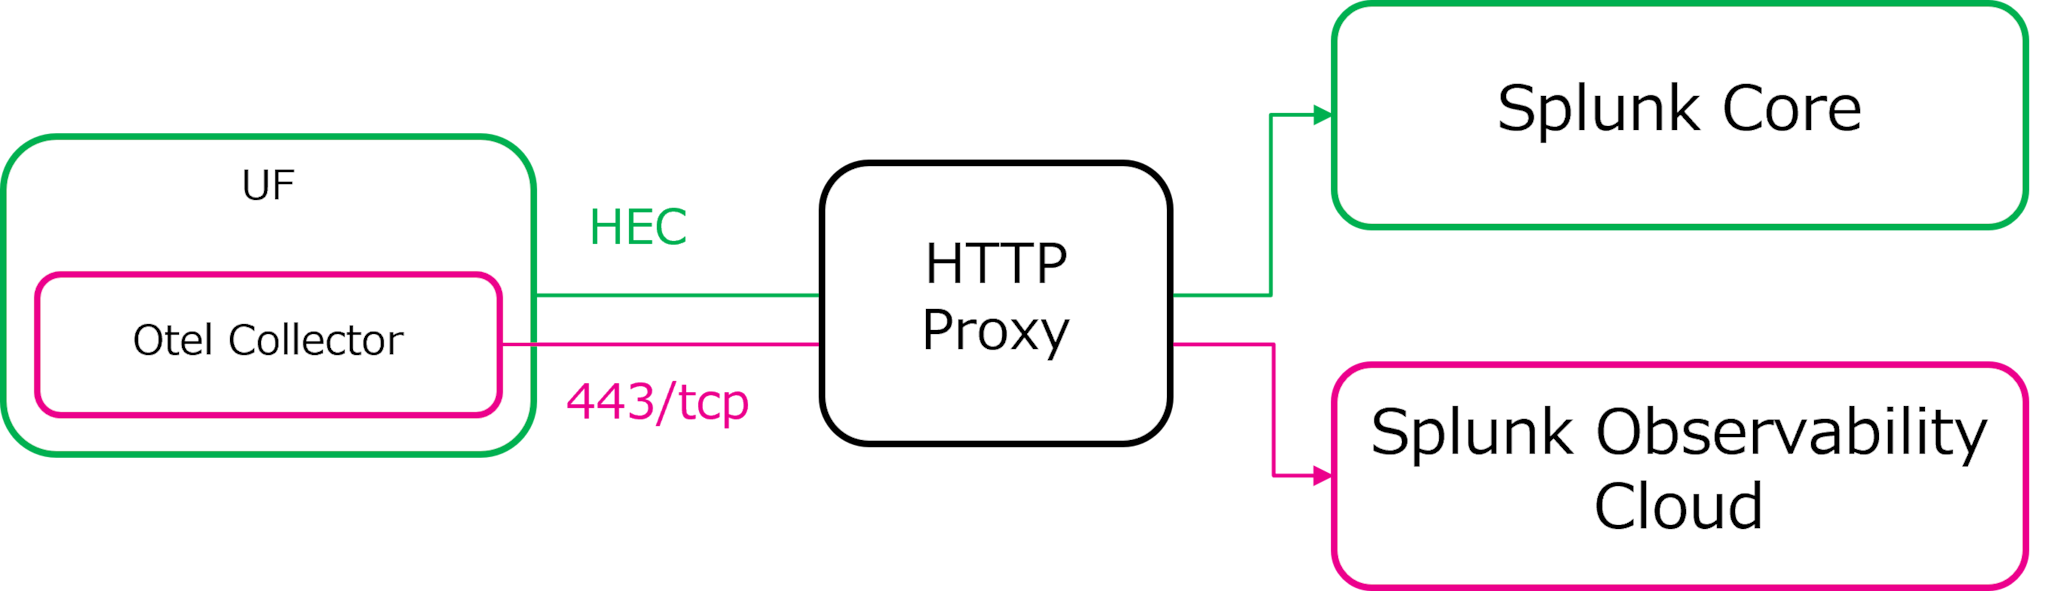 HTTP Proxyを経由する場合